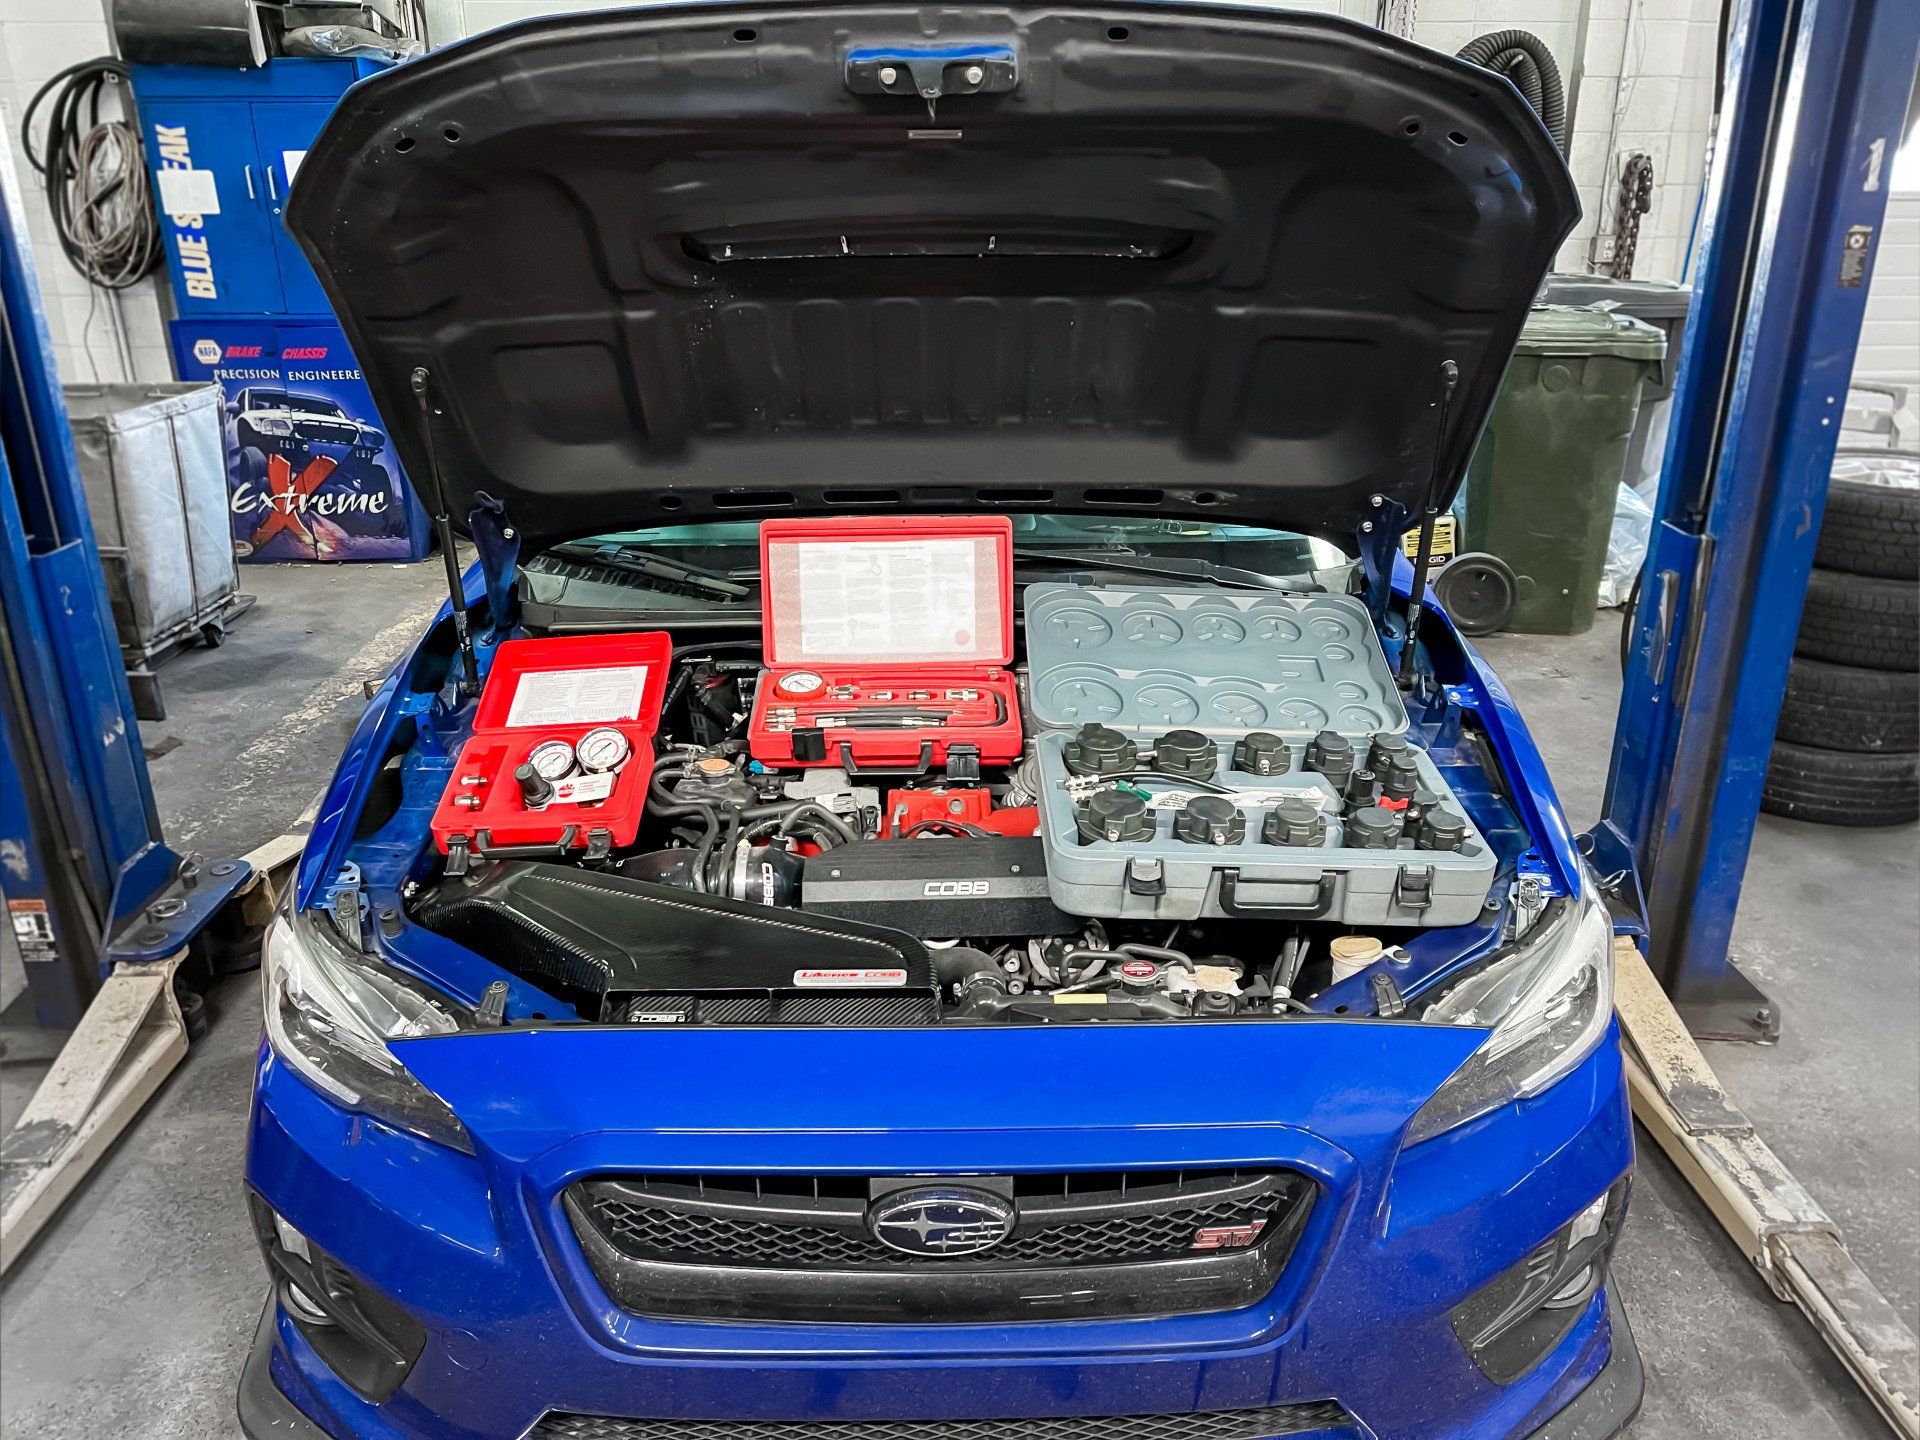 Subaru leakdown, compression and boostleak test (engine health assesment test)